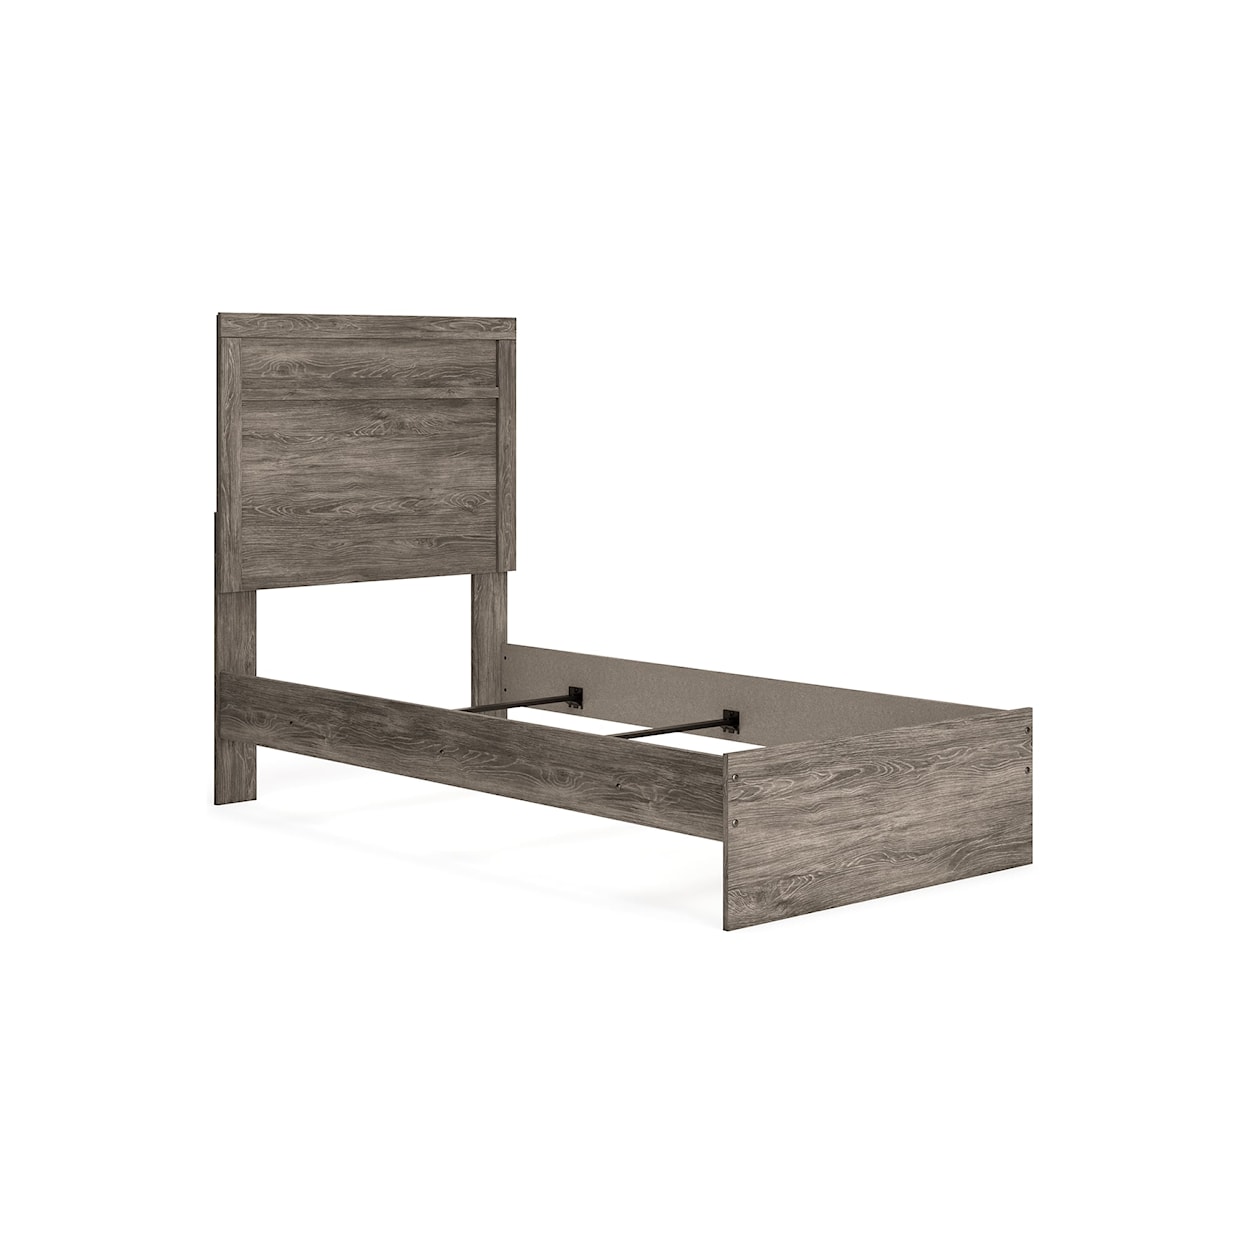 Ashley Furniture Signature Design Ralinksi Twin Panel Bed